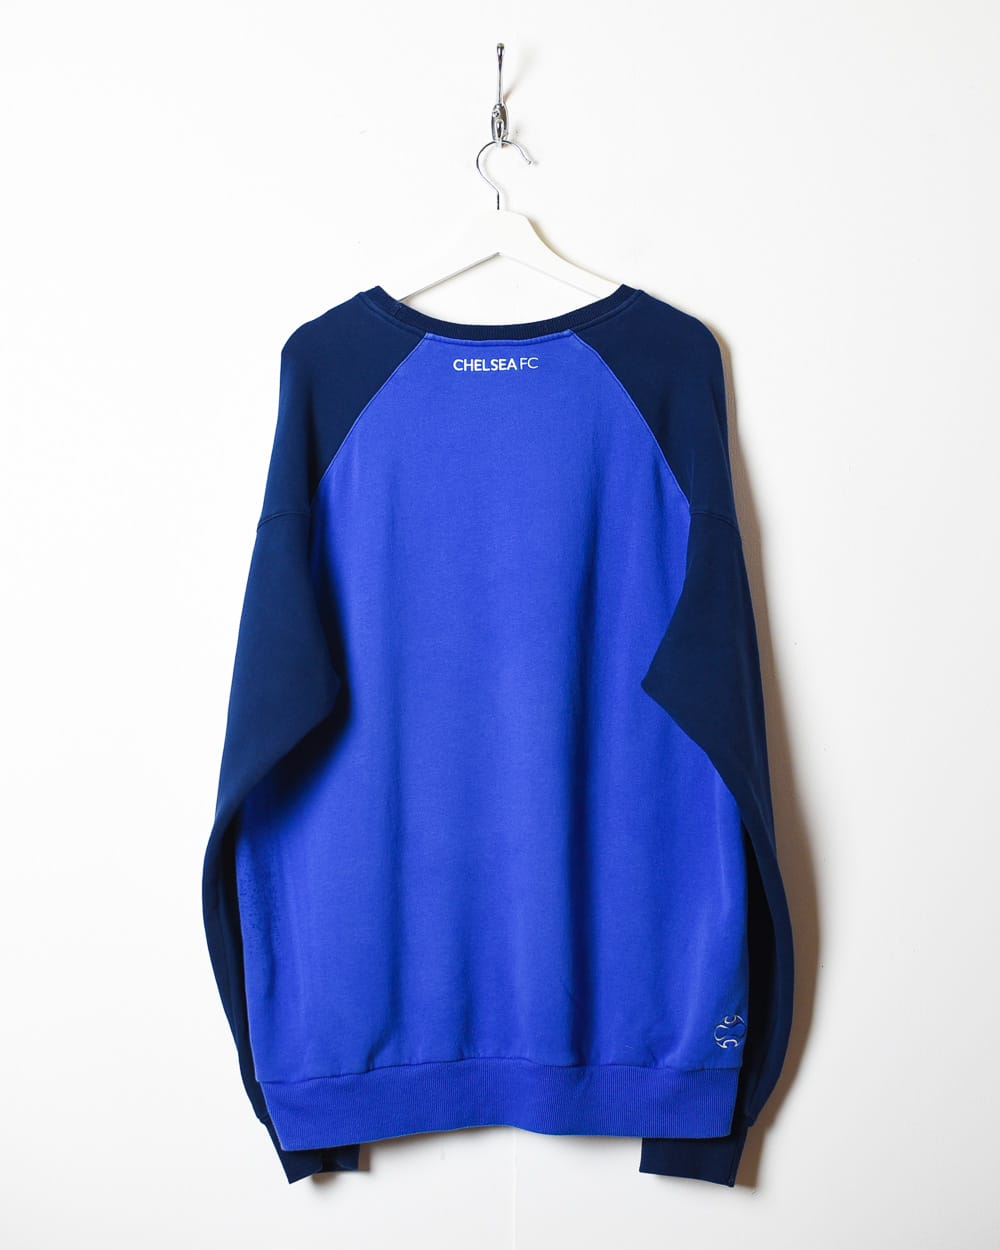 Blue Adidas Chelsea Warmup Sweatshirt - XX-Large